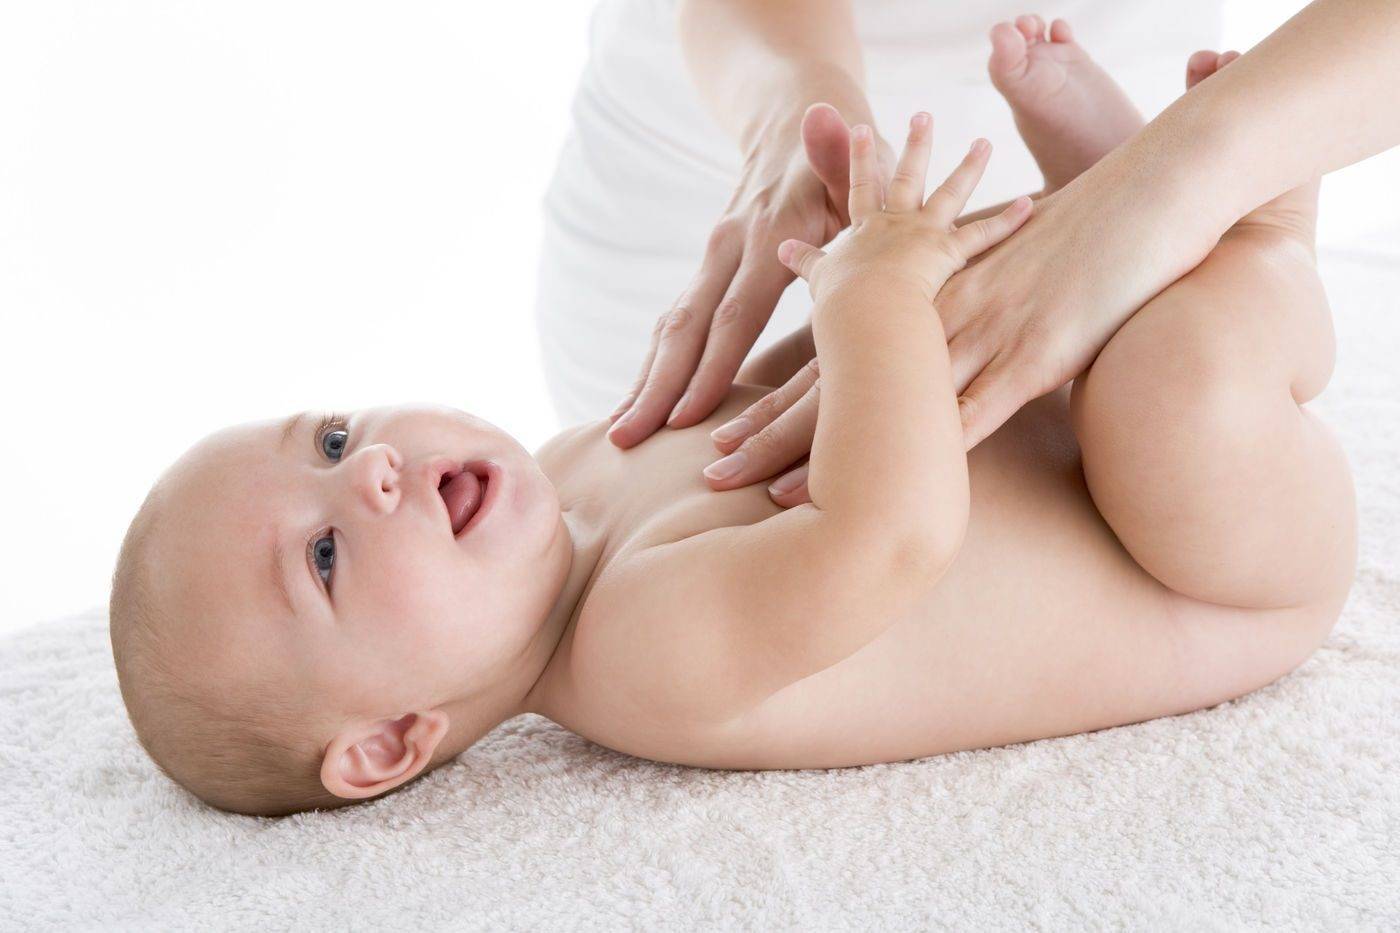 Повышенный тонус у младенца - всё о грудничках